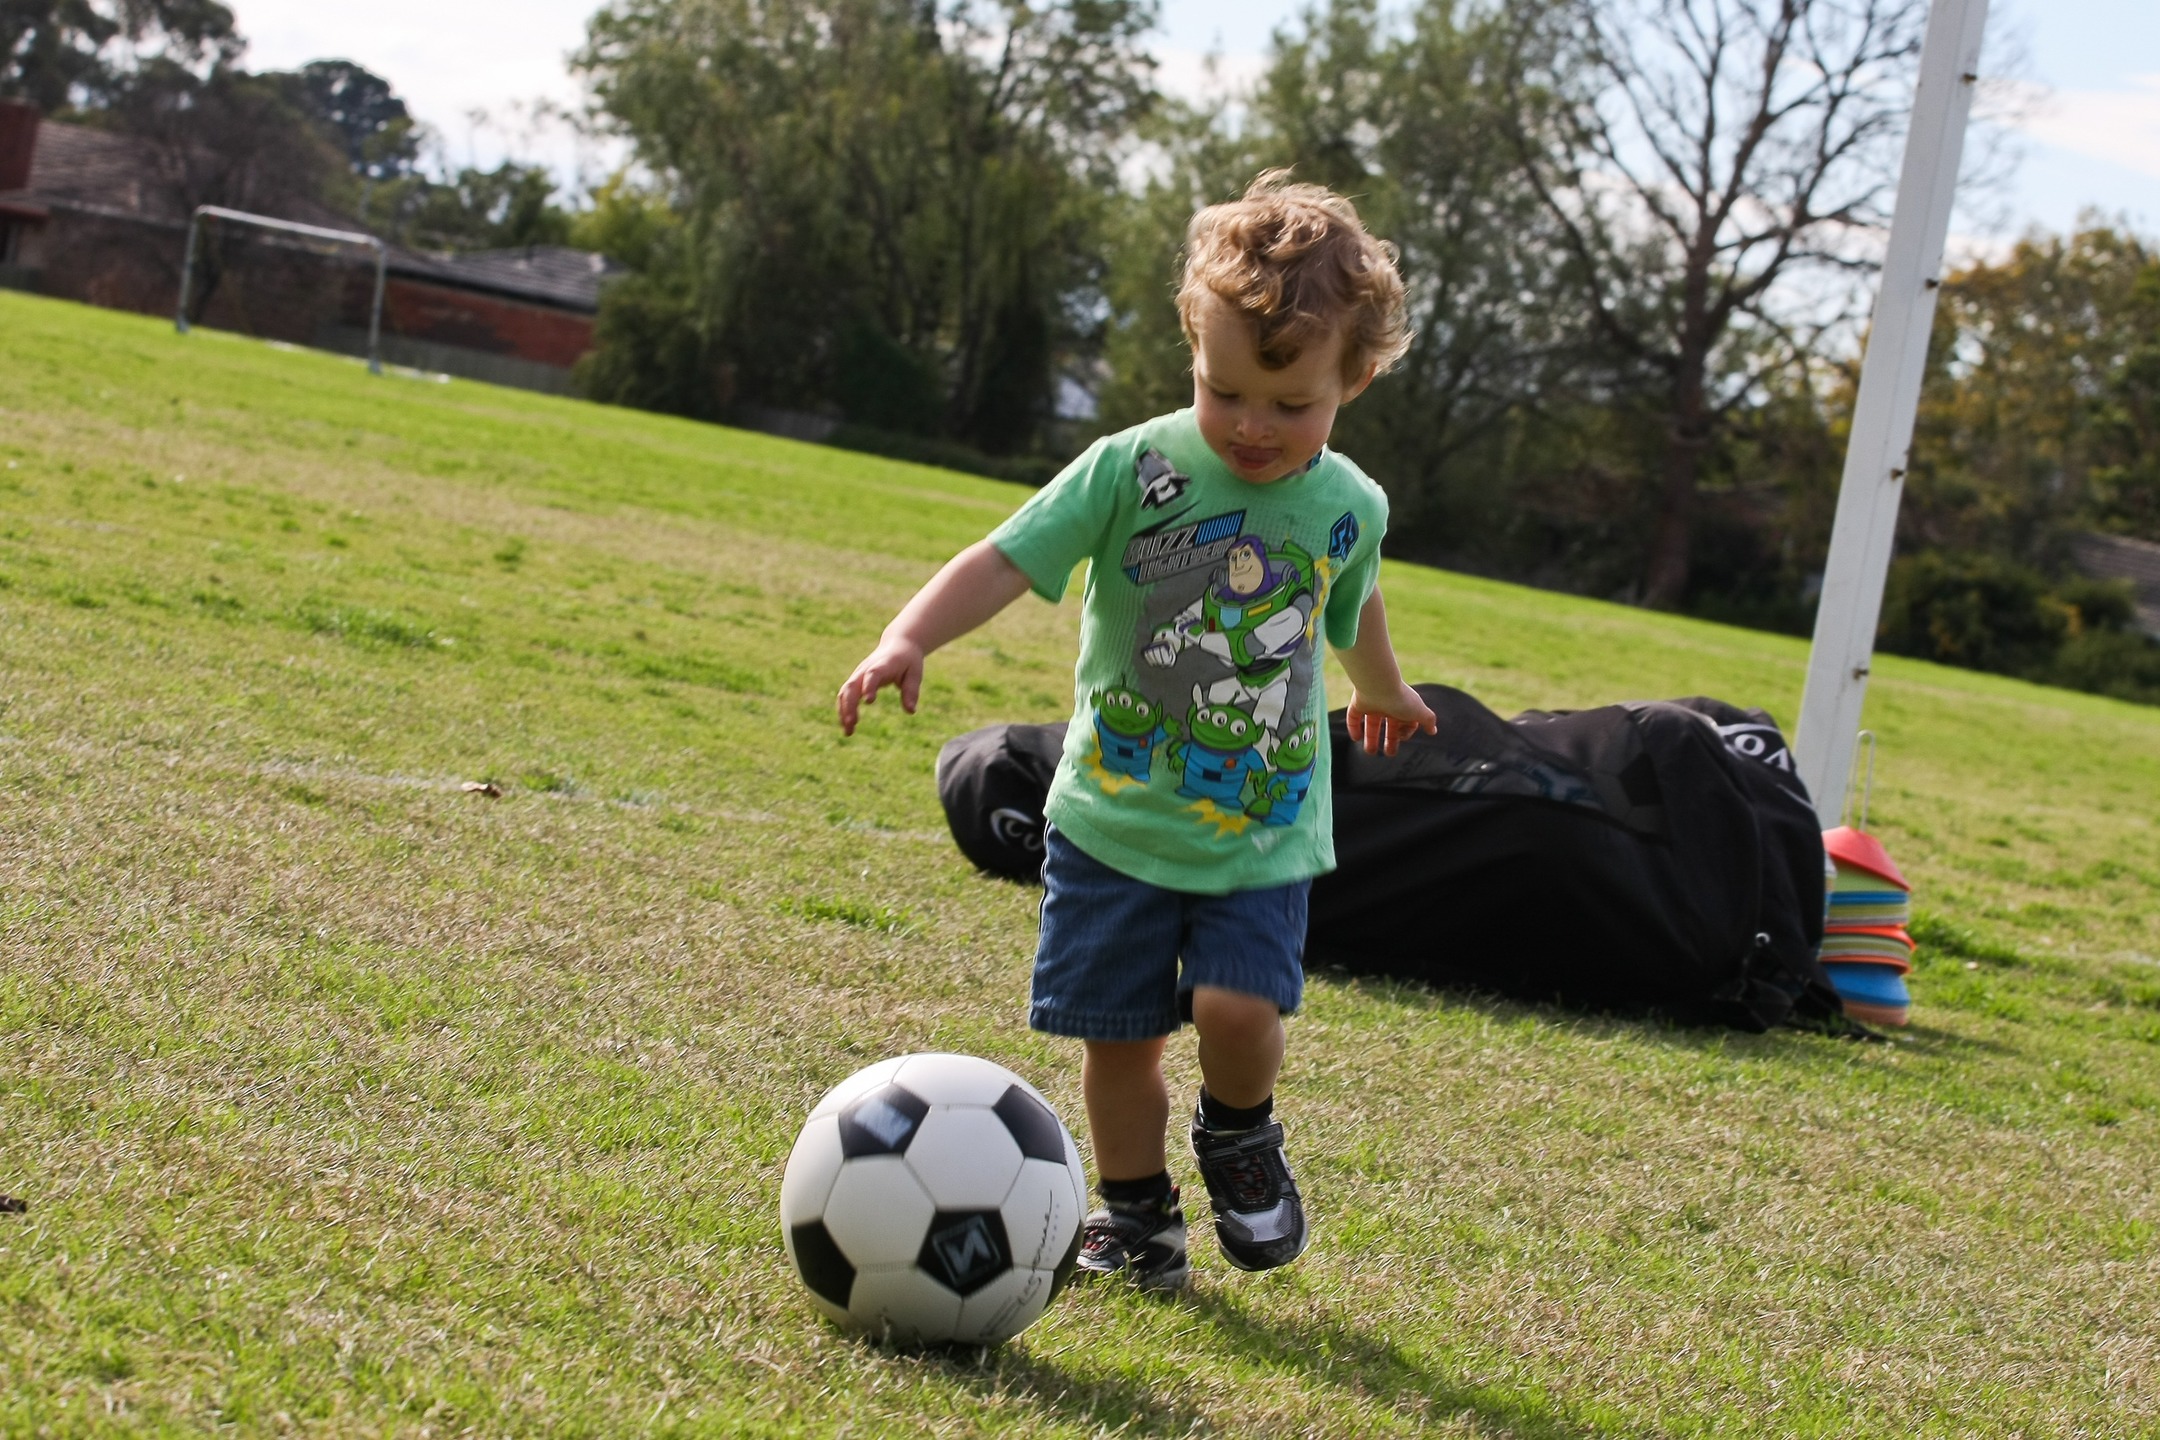 sport-play-boy-soccer-playing-player-1016854-pxhere.com